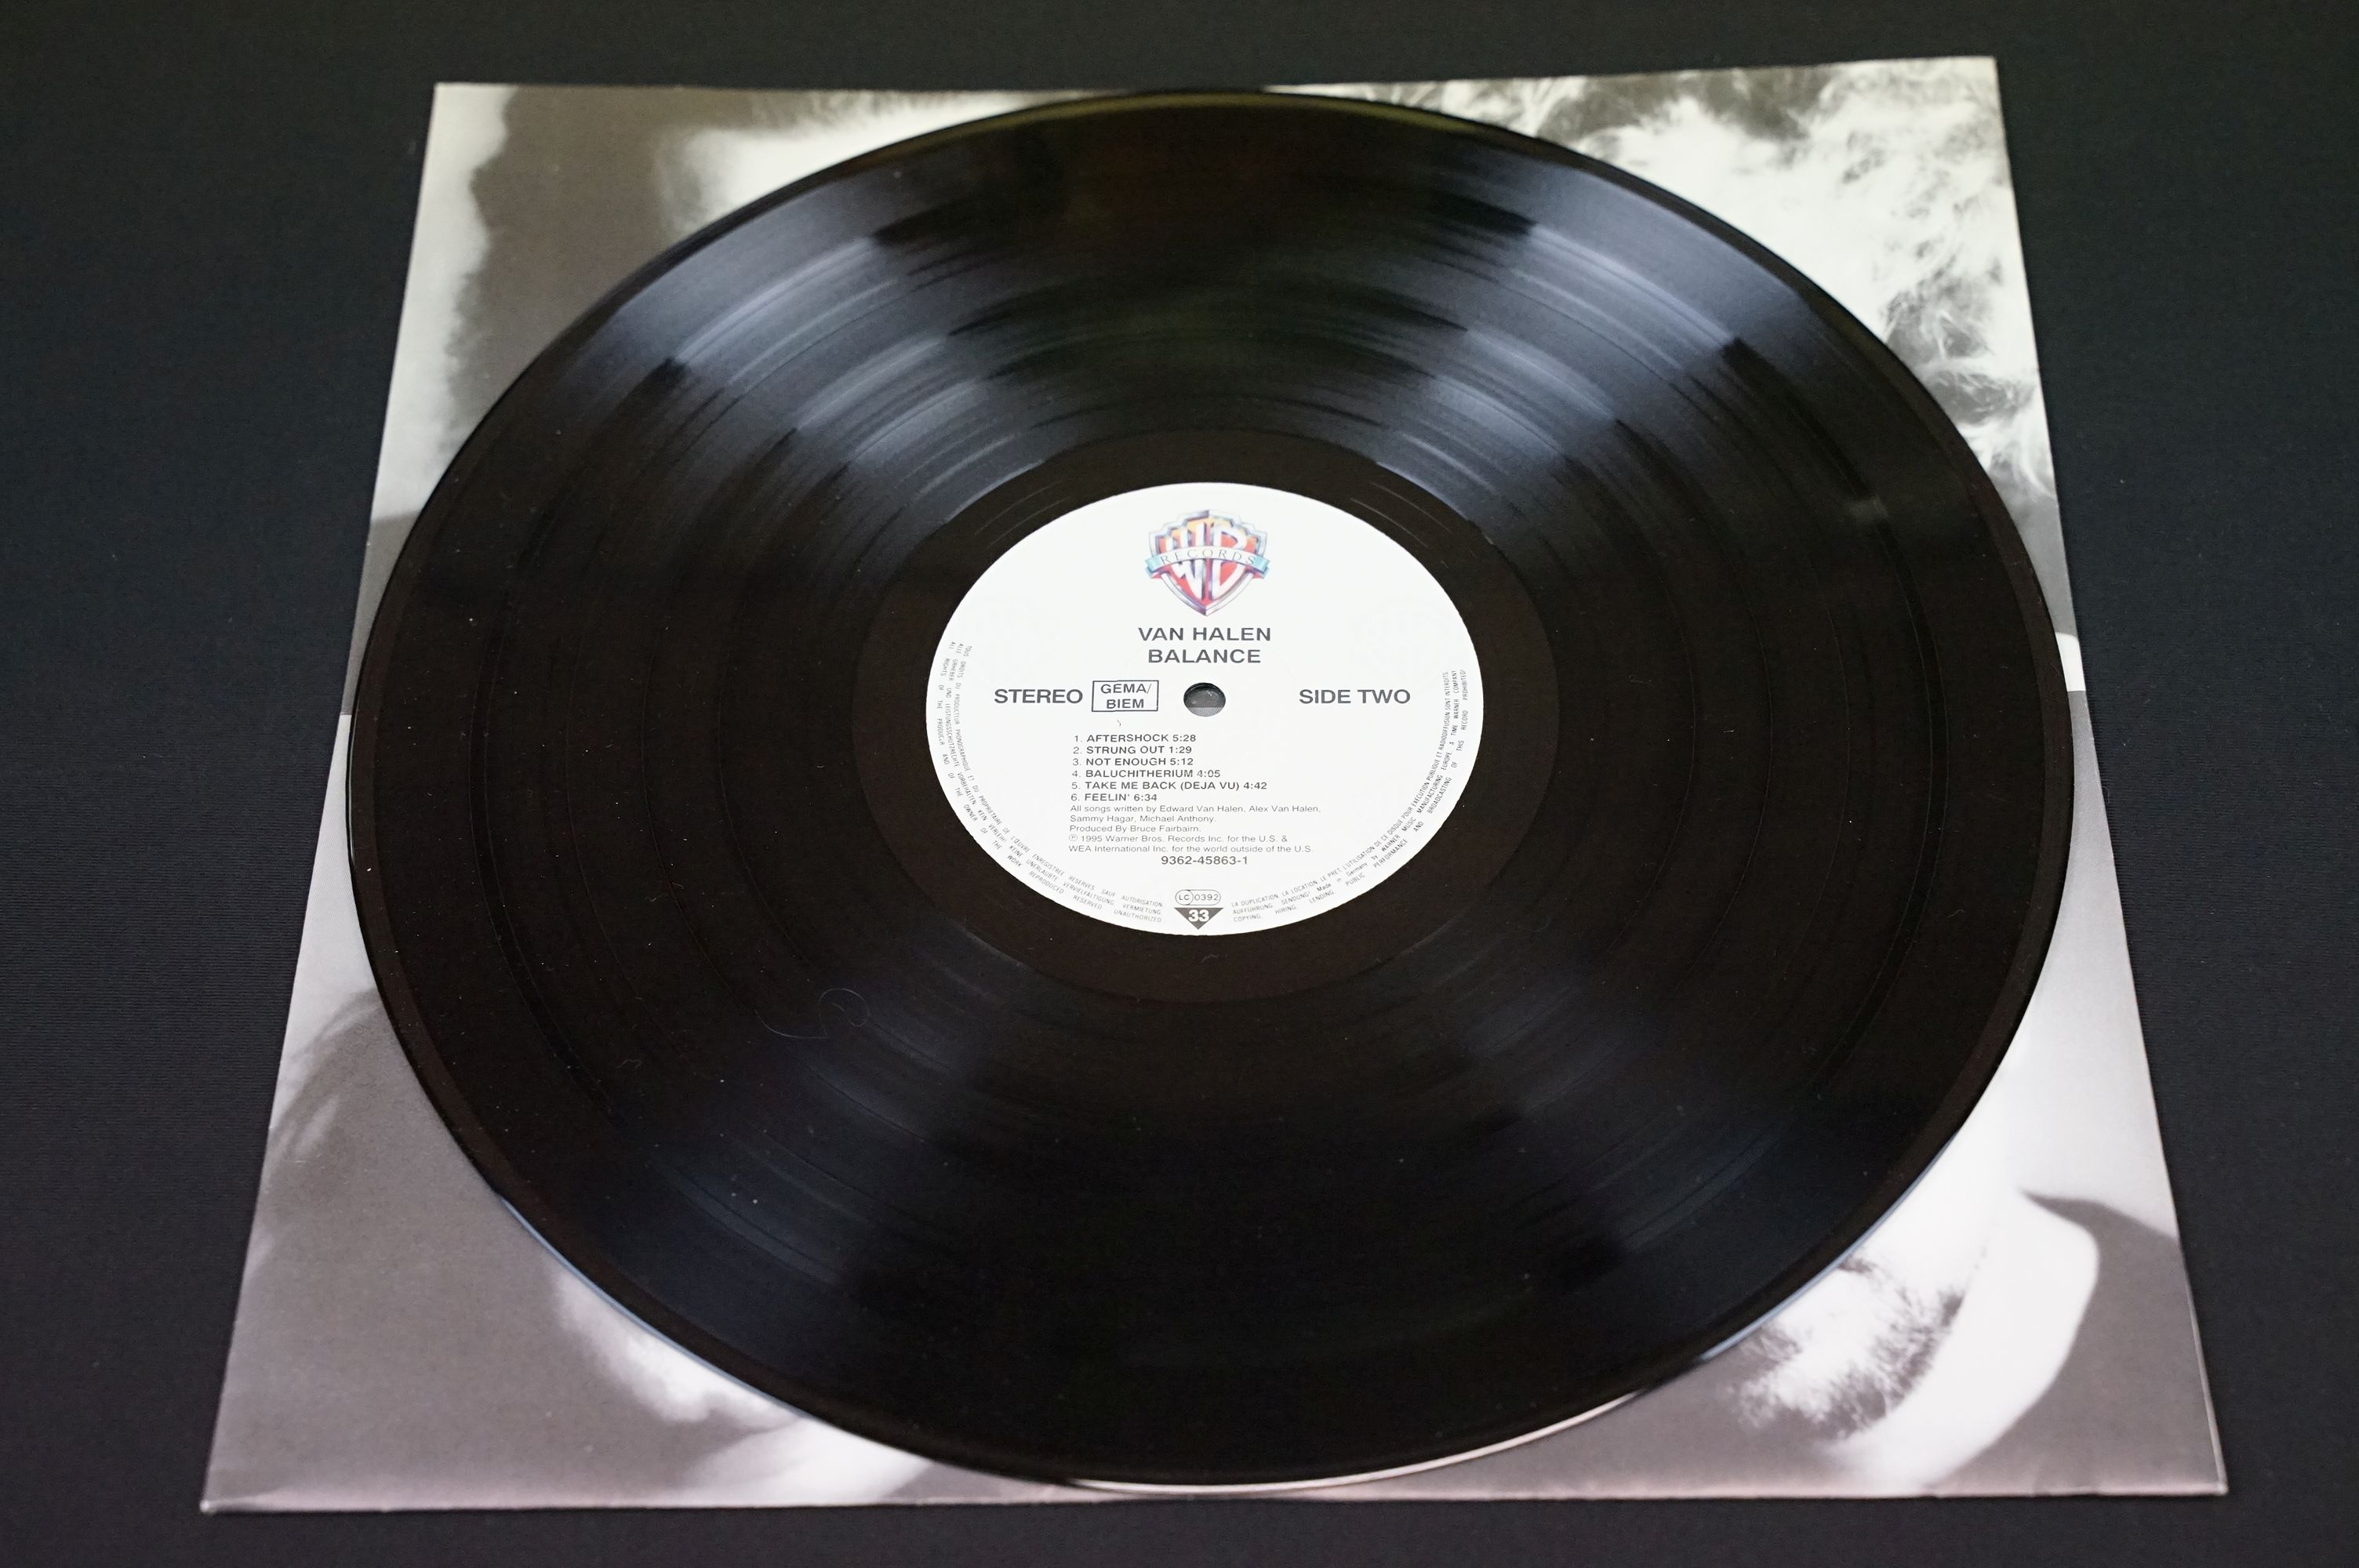 Vinyl - Van Halen – Balance. Original UK / EU 1995 1st pressing on Warner Bros. Records 9362-45863-1 - Image 5 of 6